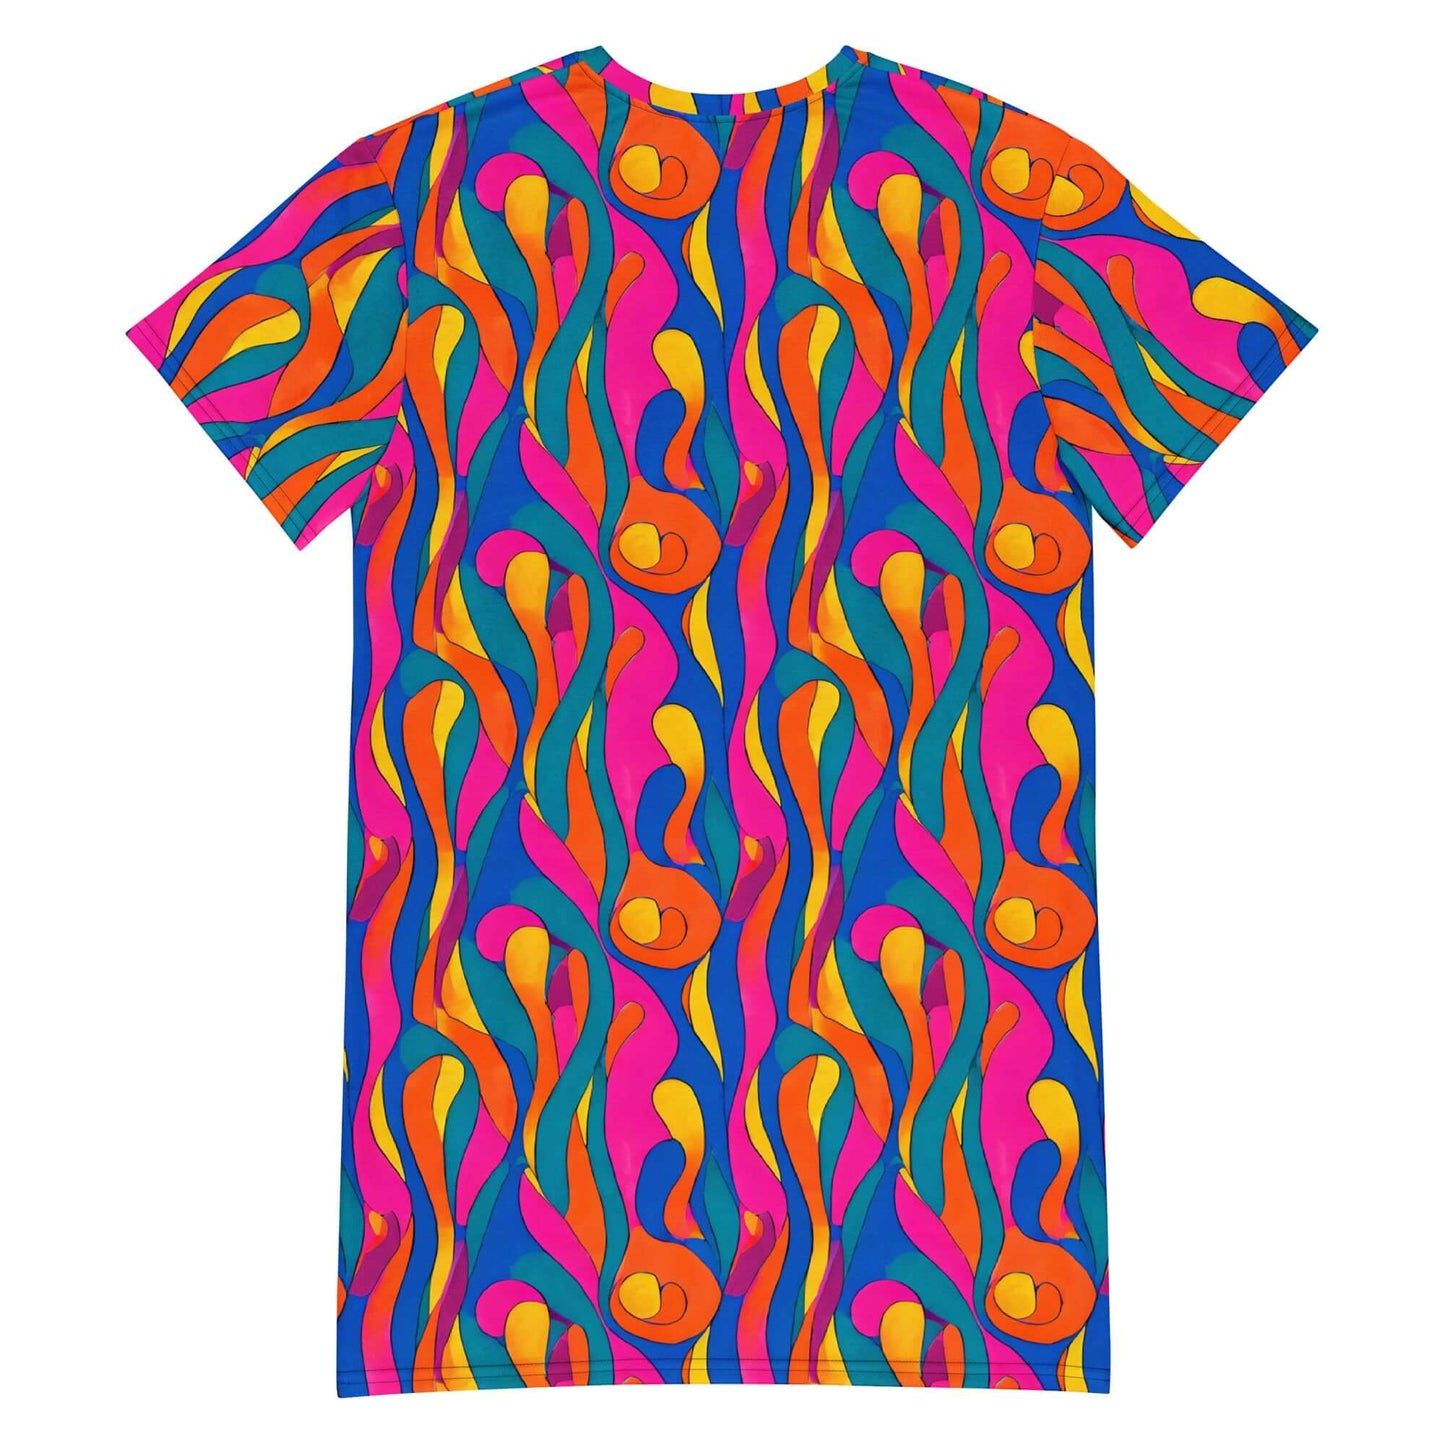 Abstract Swirls T-shirt dress